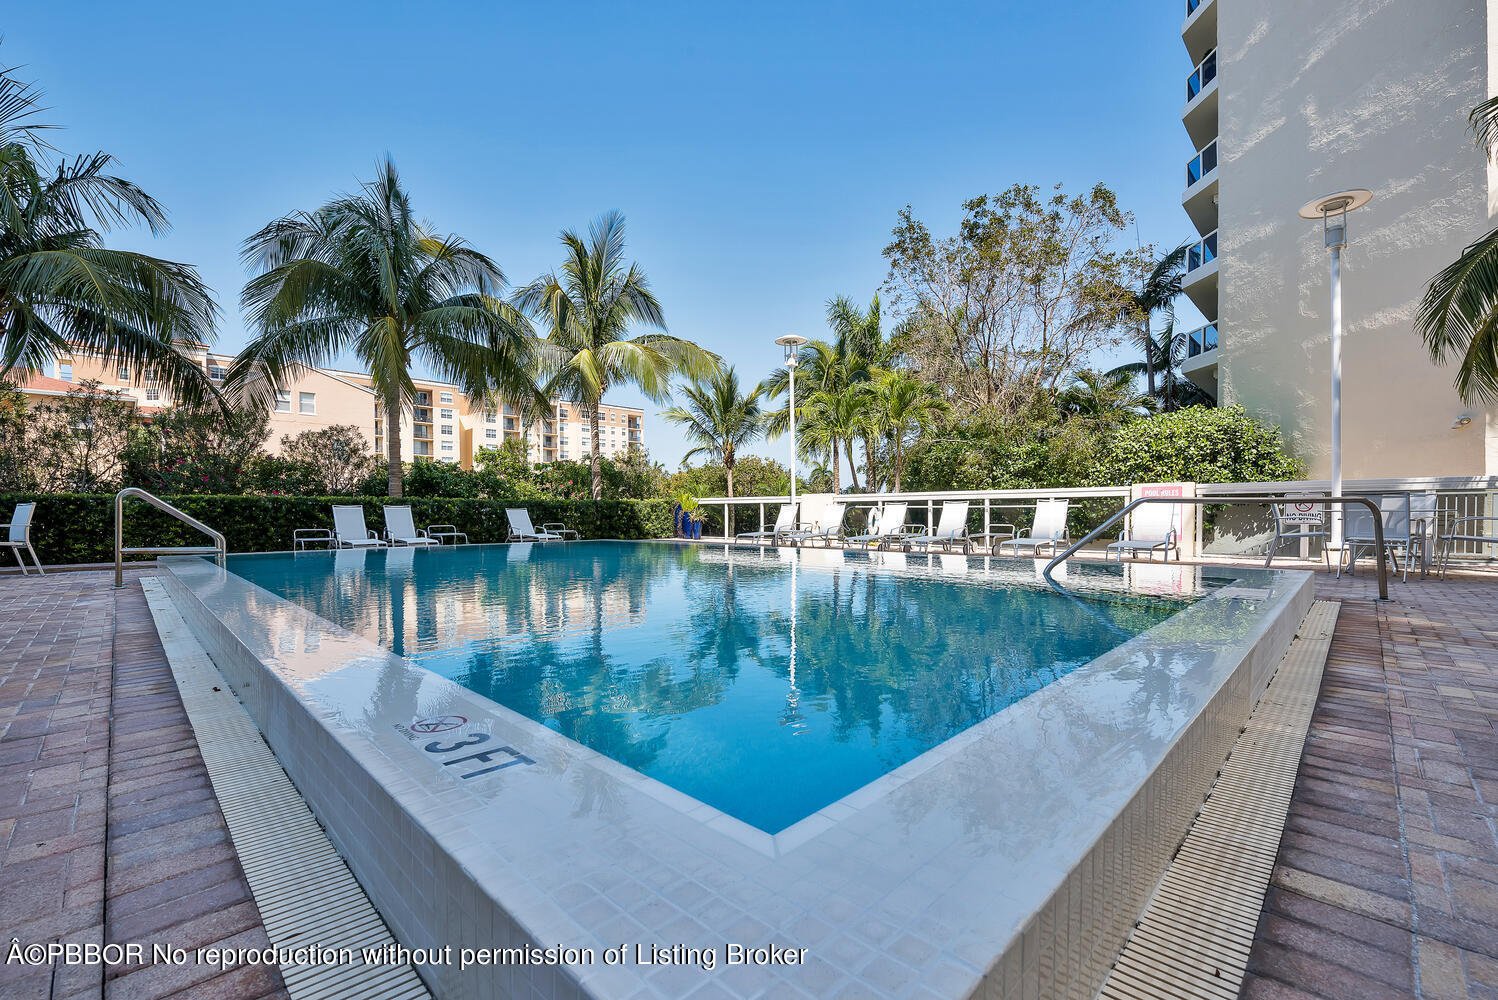 Luxury Palm Beach Condominium and Co-Op Buildings - Linda R. Olsson Inc ...